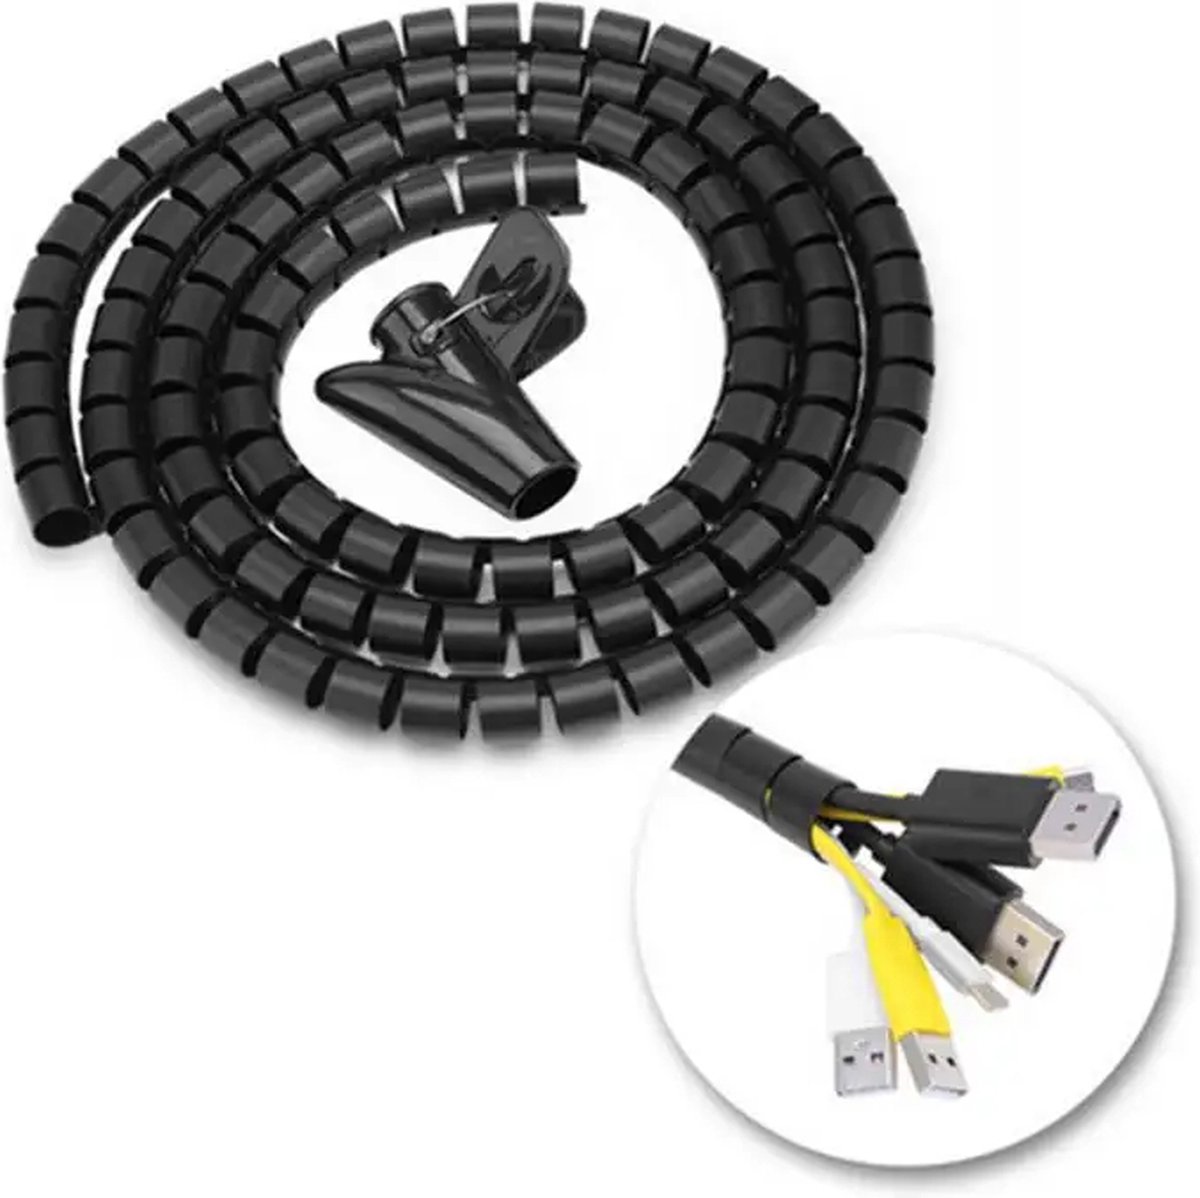 My Arc - Spiraalslang Kabel Organizer - 2m lang, 22mm diameter, zwart - Inclusief handige tool